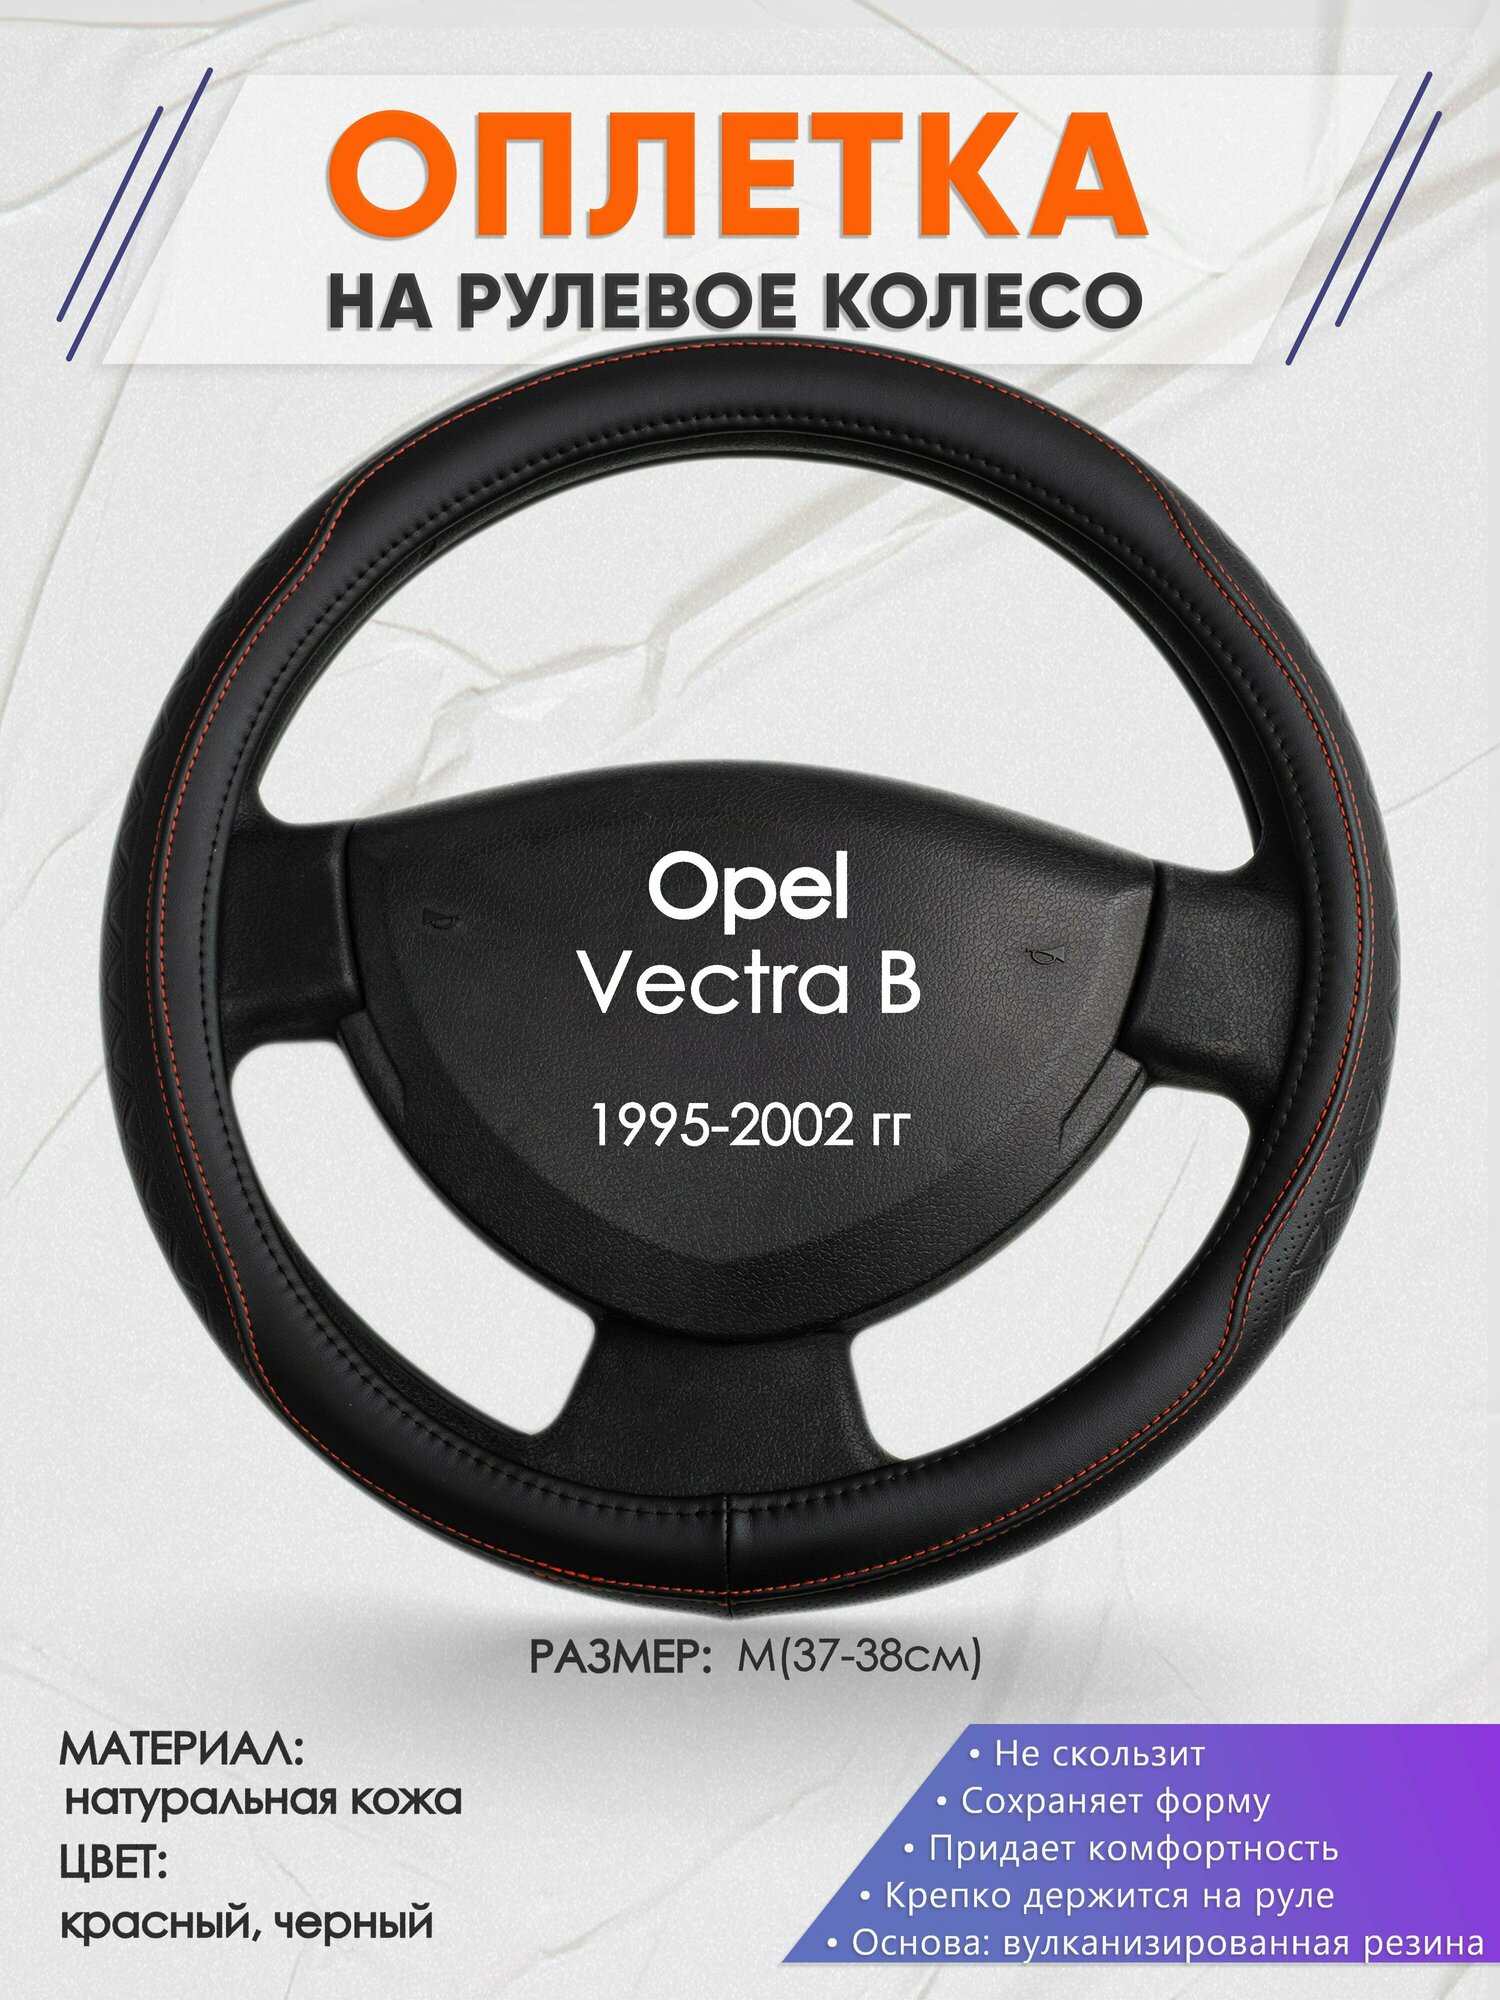 Оплетка на руль для Opel Vectra B(Опель Вектра Б) 1995-2002, M(37-38см), Натуральная кожа 90